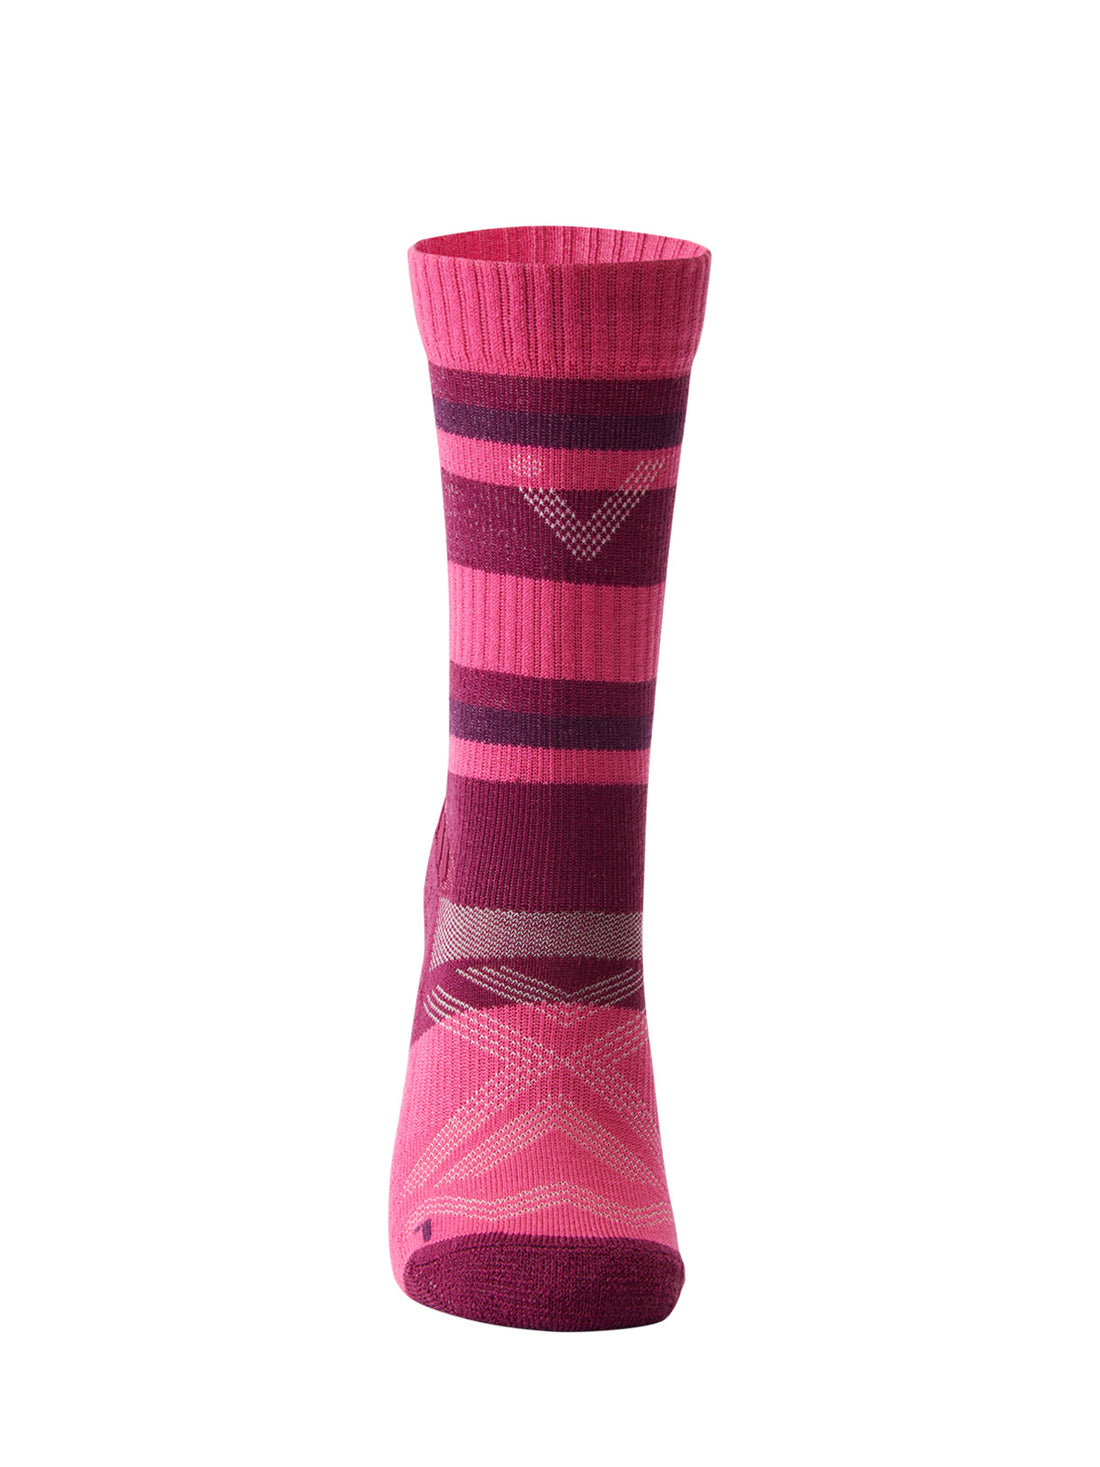 Women's Cusion Prism Wool Hiking Socks